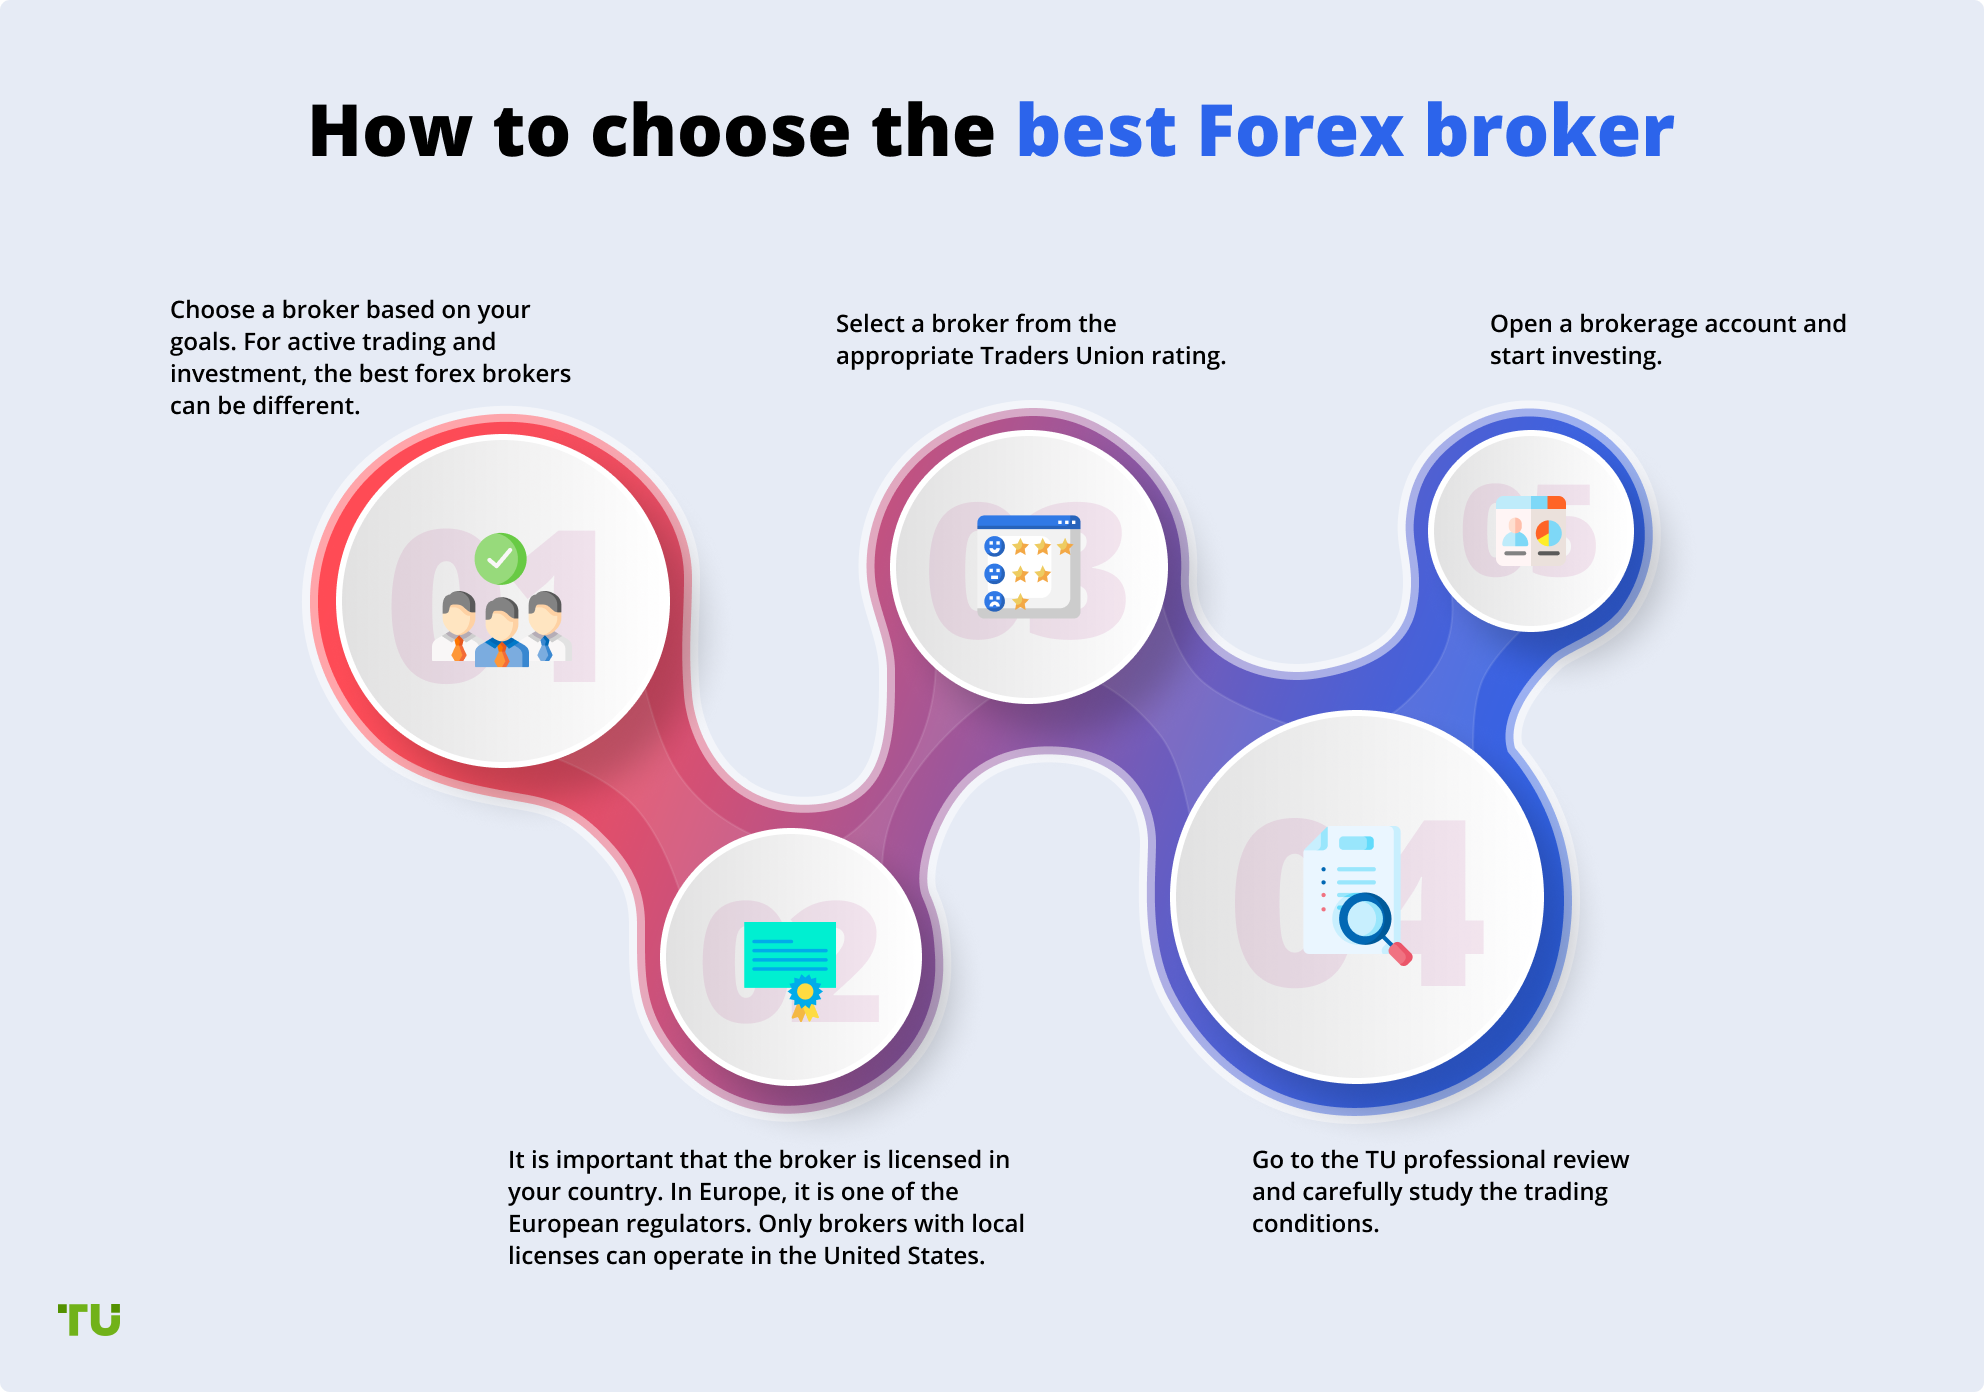 Honest reliable forex broker objectives based investing for beginners